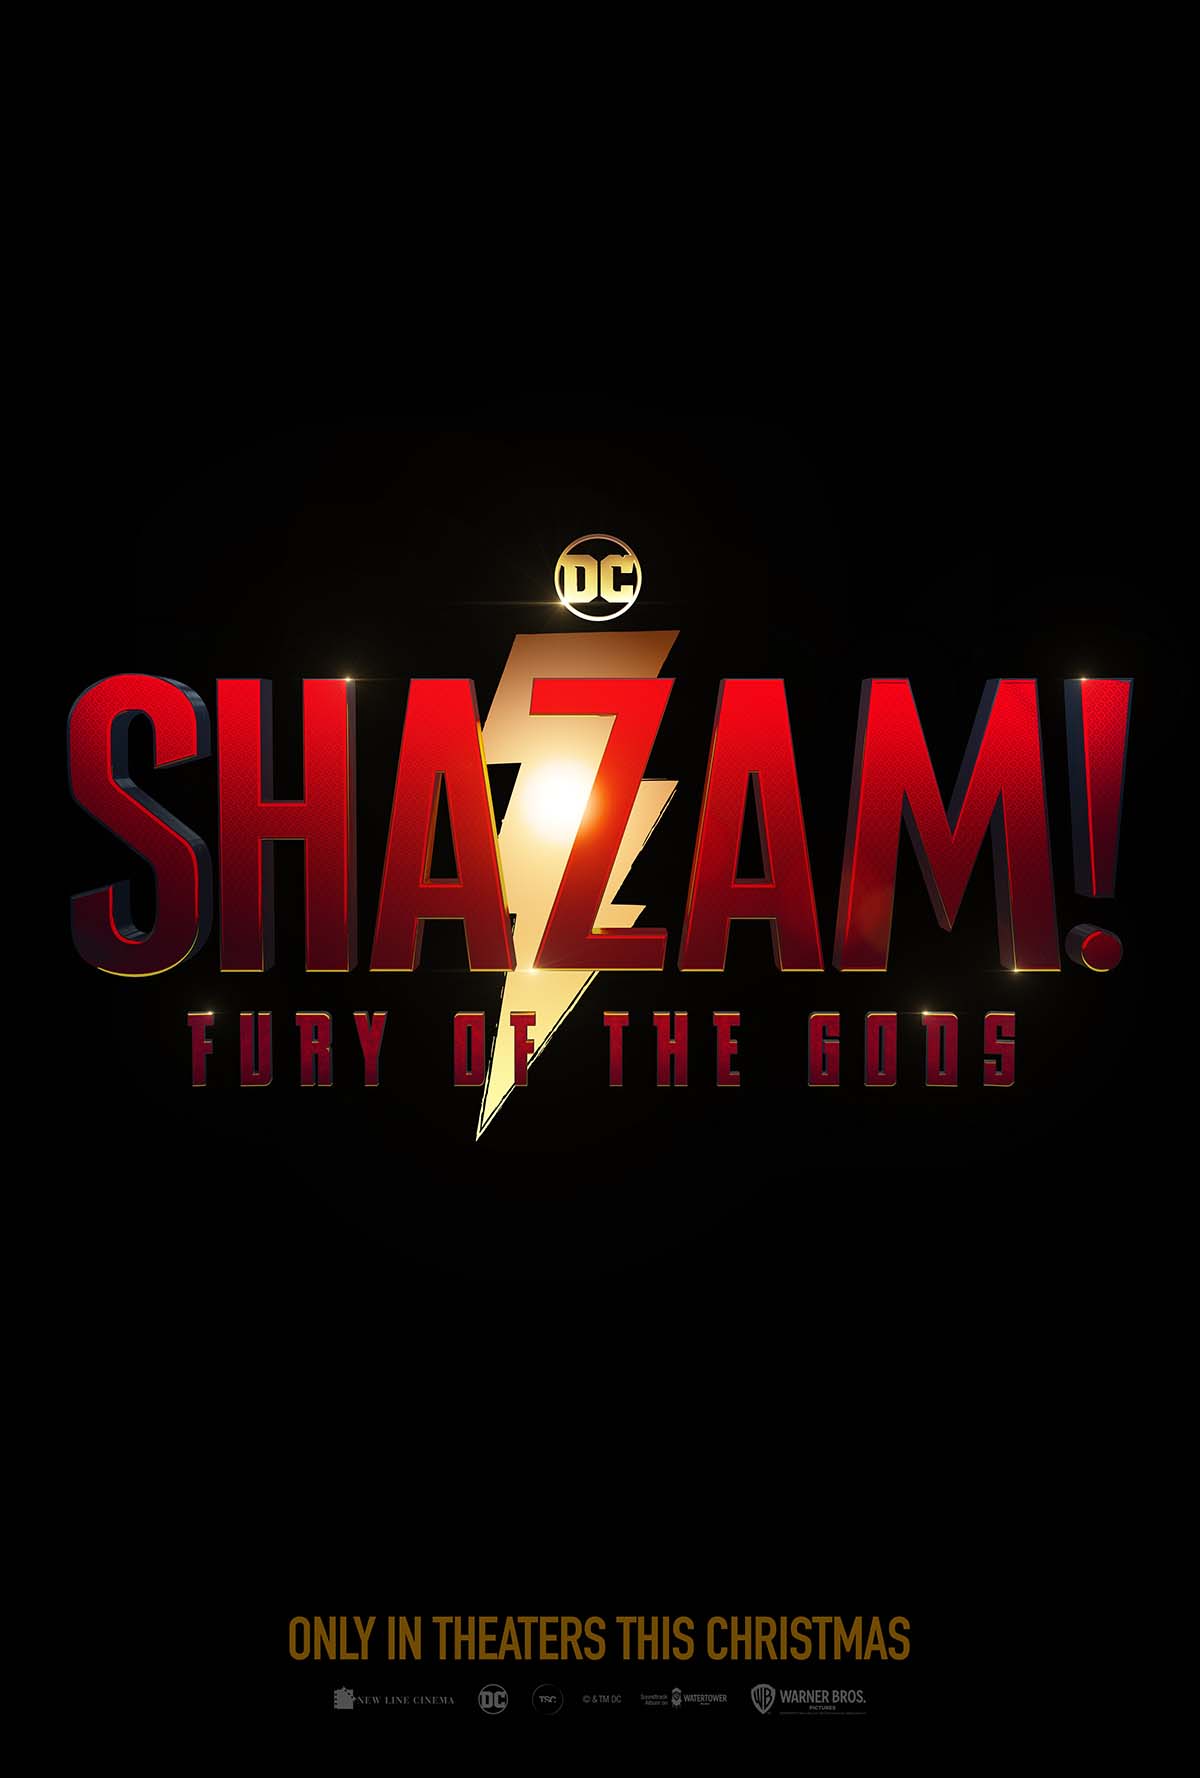 Where Can I Watch 'Shazam! Fury of the Gods'?